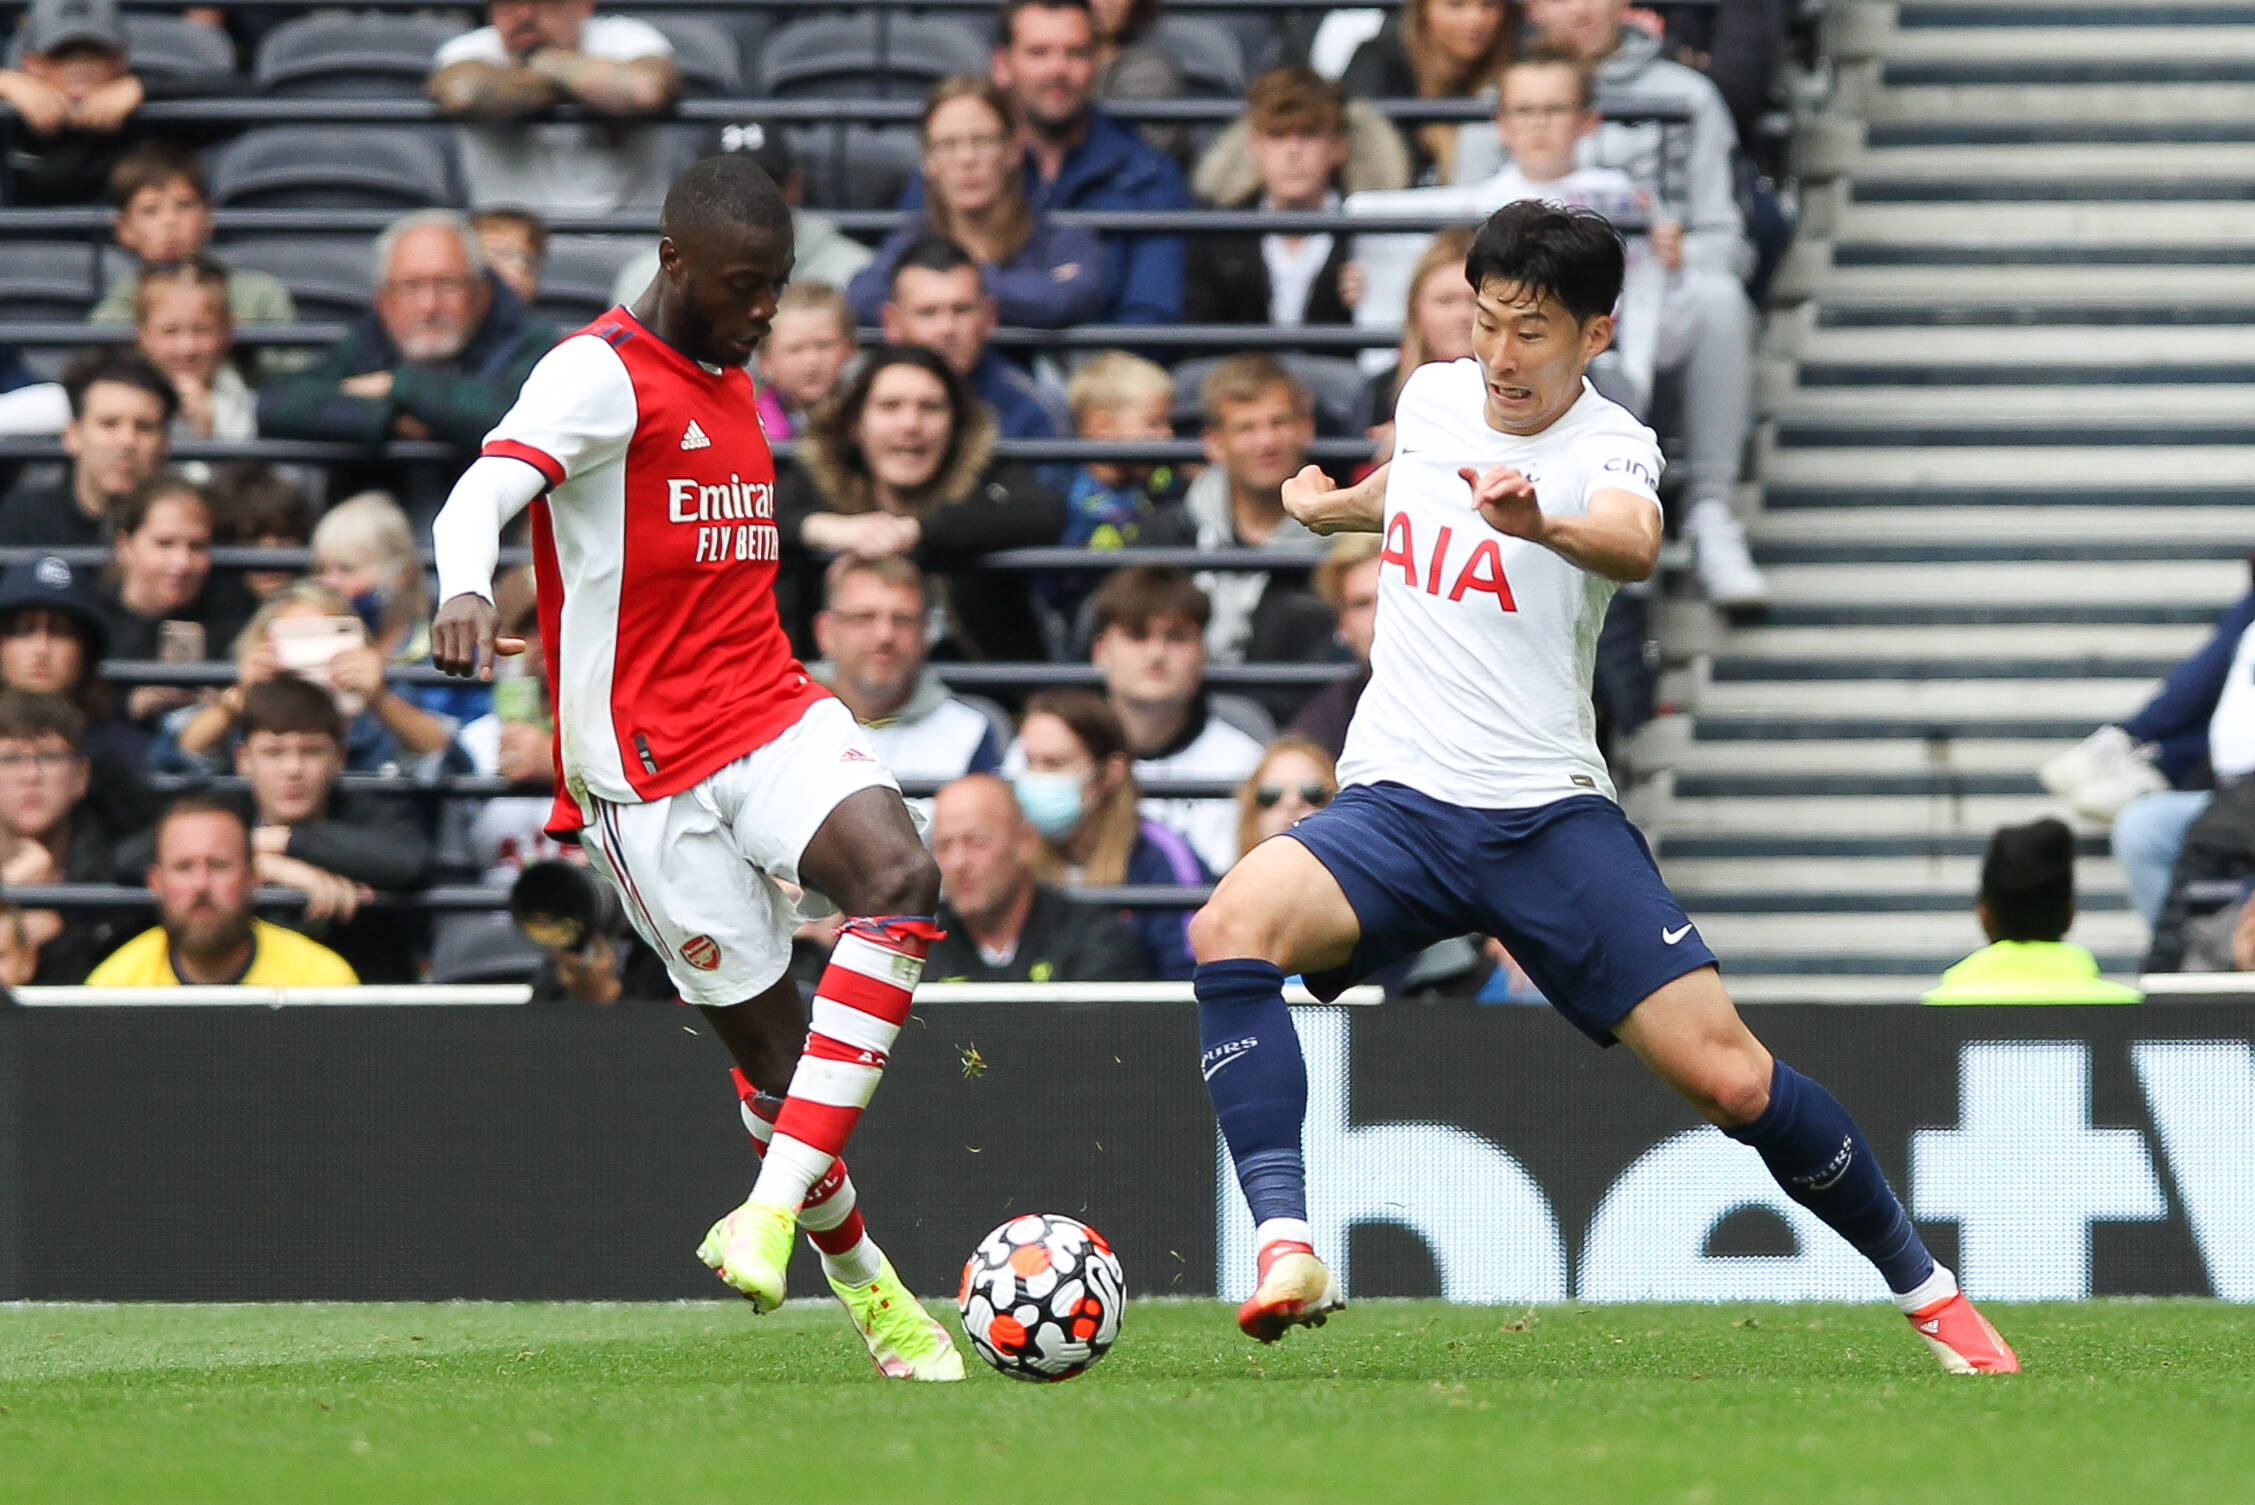 Derbi londinense: Tottenham enfrenta al Arsenal por la Premier League